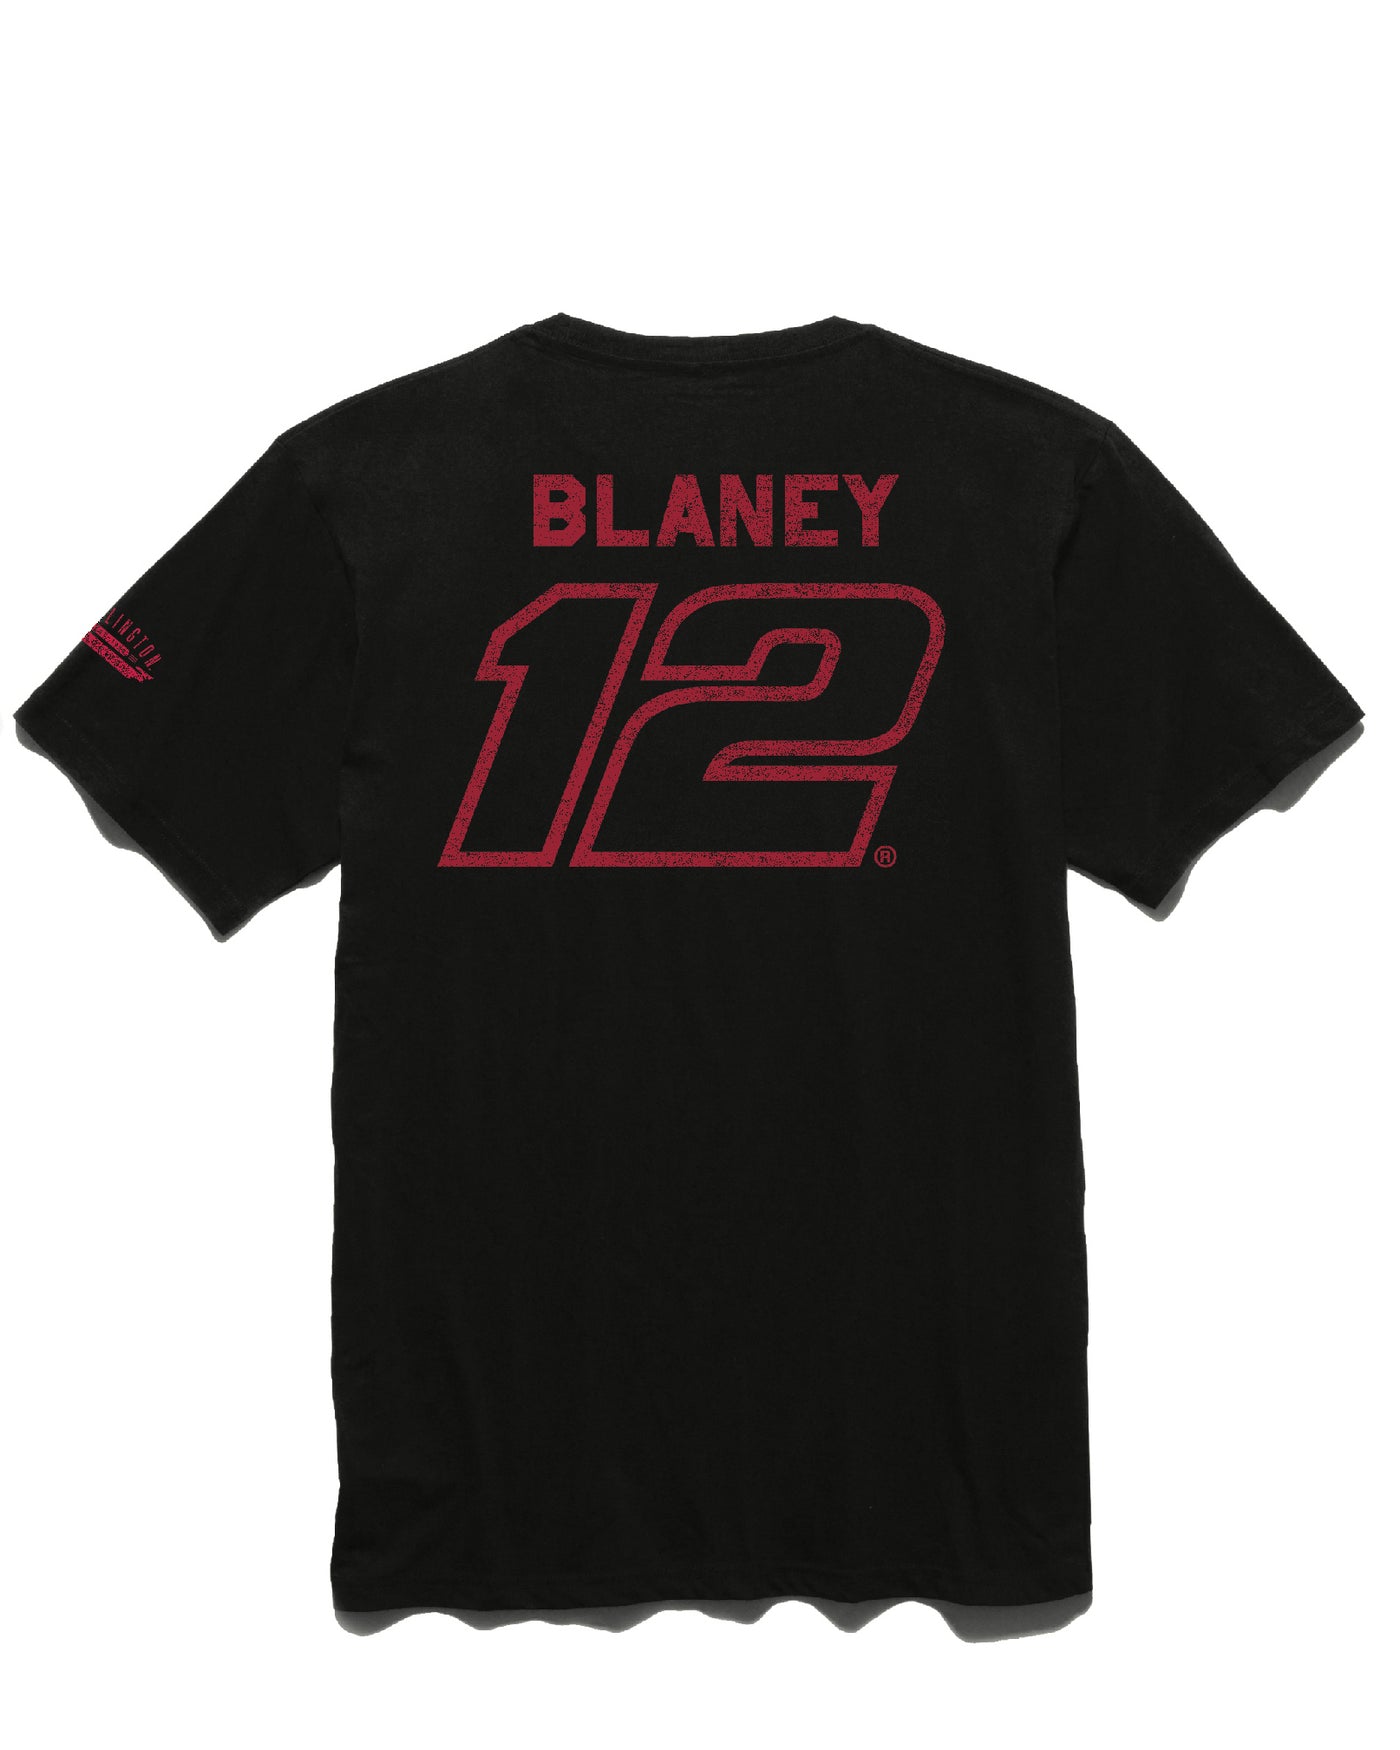 BLANEY #12 DARLINGTON TEE